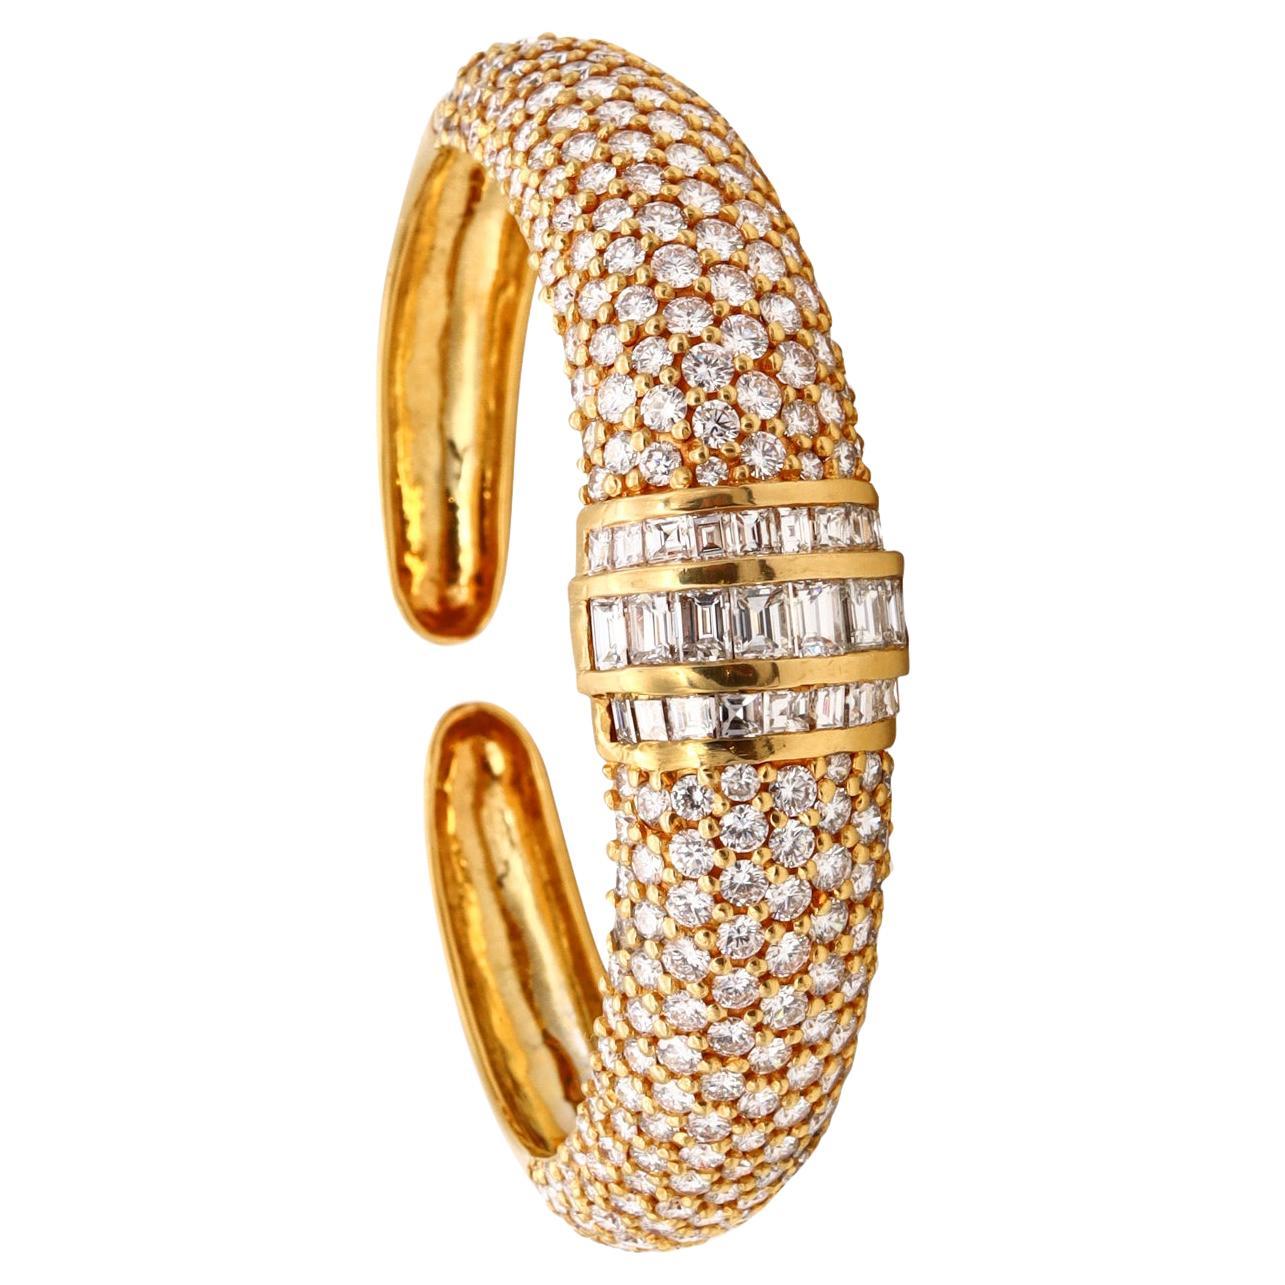 Exceptional Italian Designer Modern Bracelet in 18Kt Gold 21.12 Cts VS Diamonds For Sale